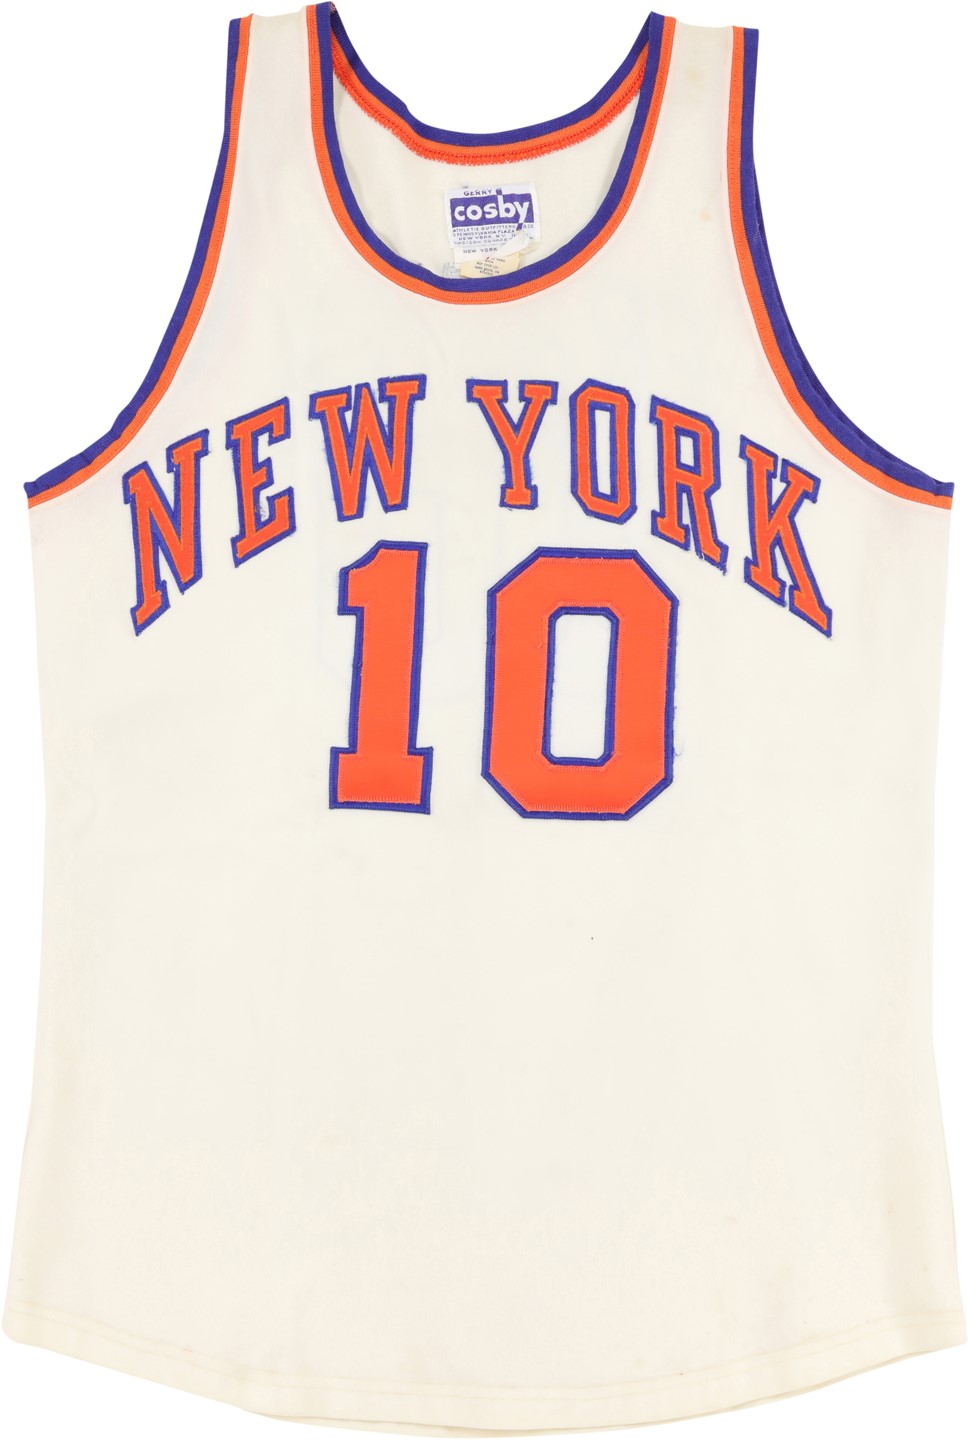 - Early 1970s Walt Frazier New York Knicks Game Worn Jersey (Sources from Former Knicks Employee)